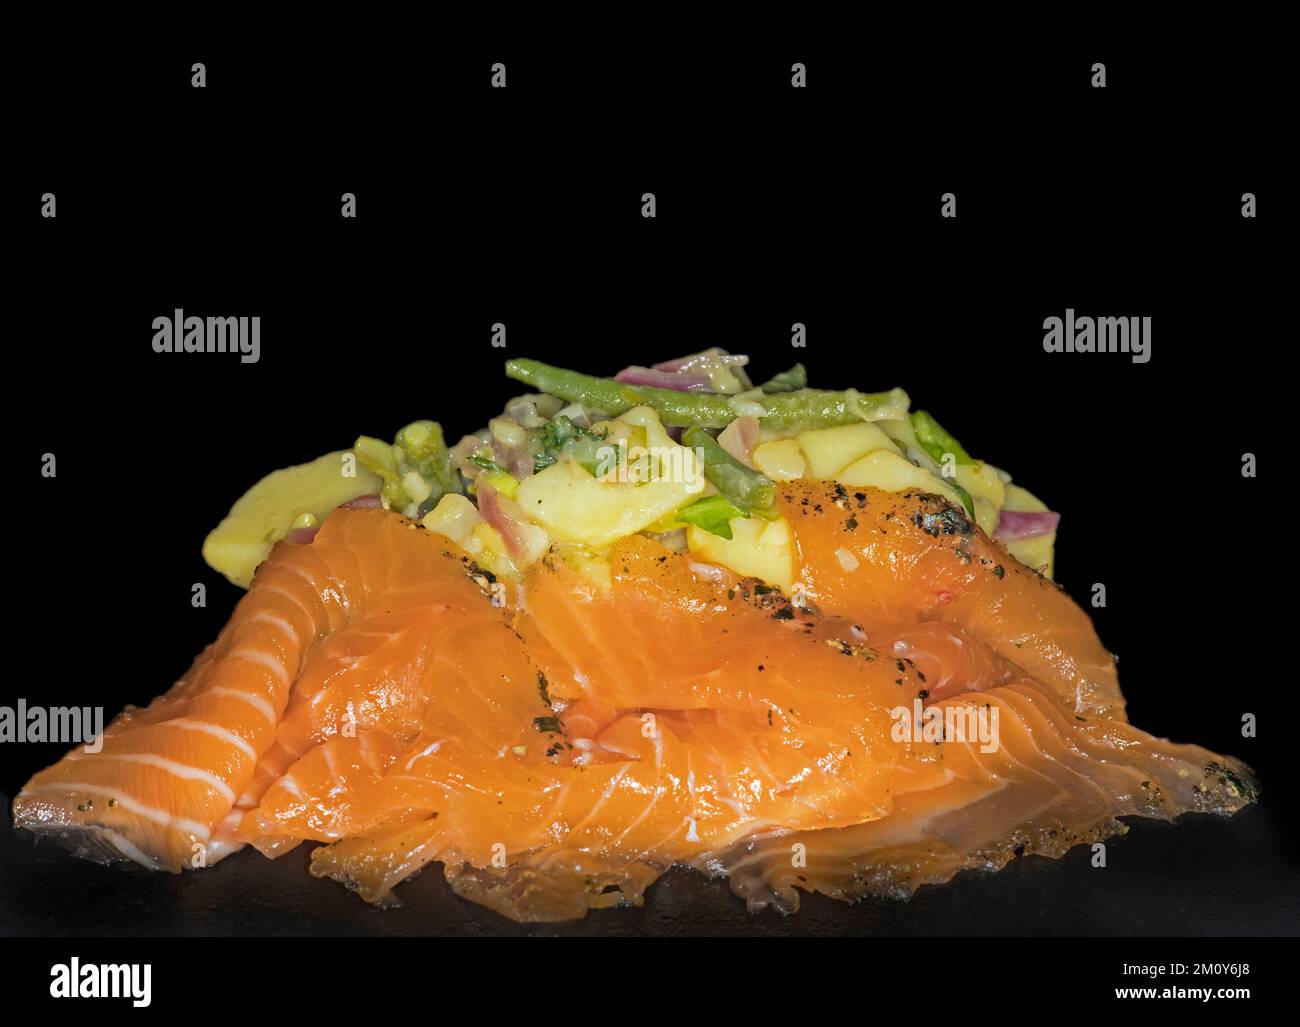 Norwegian salmon with salad Stock Photo